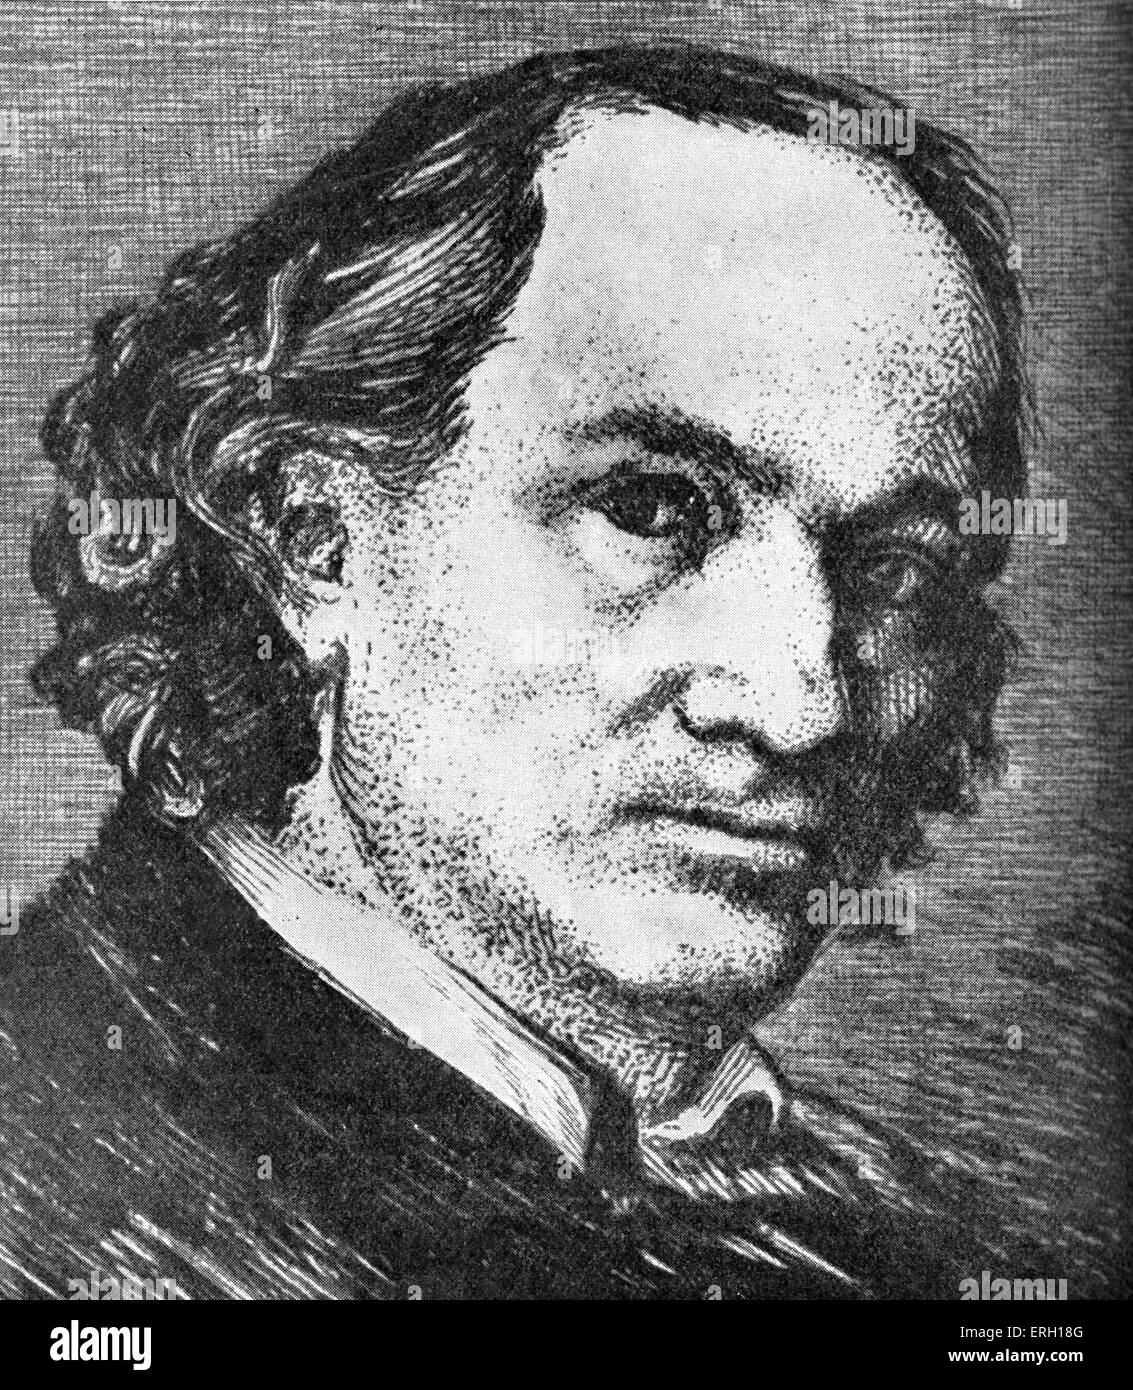 Charles Baudelaire portrait. French poet 1821-1867 Stock Photo - Alamy